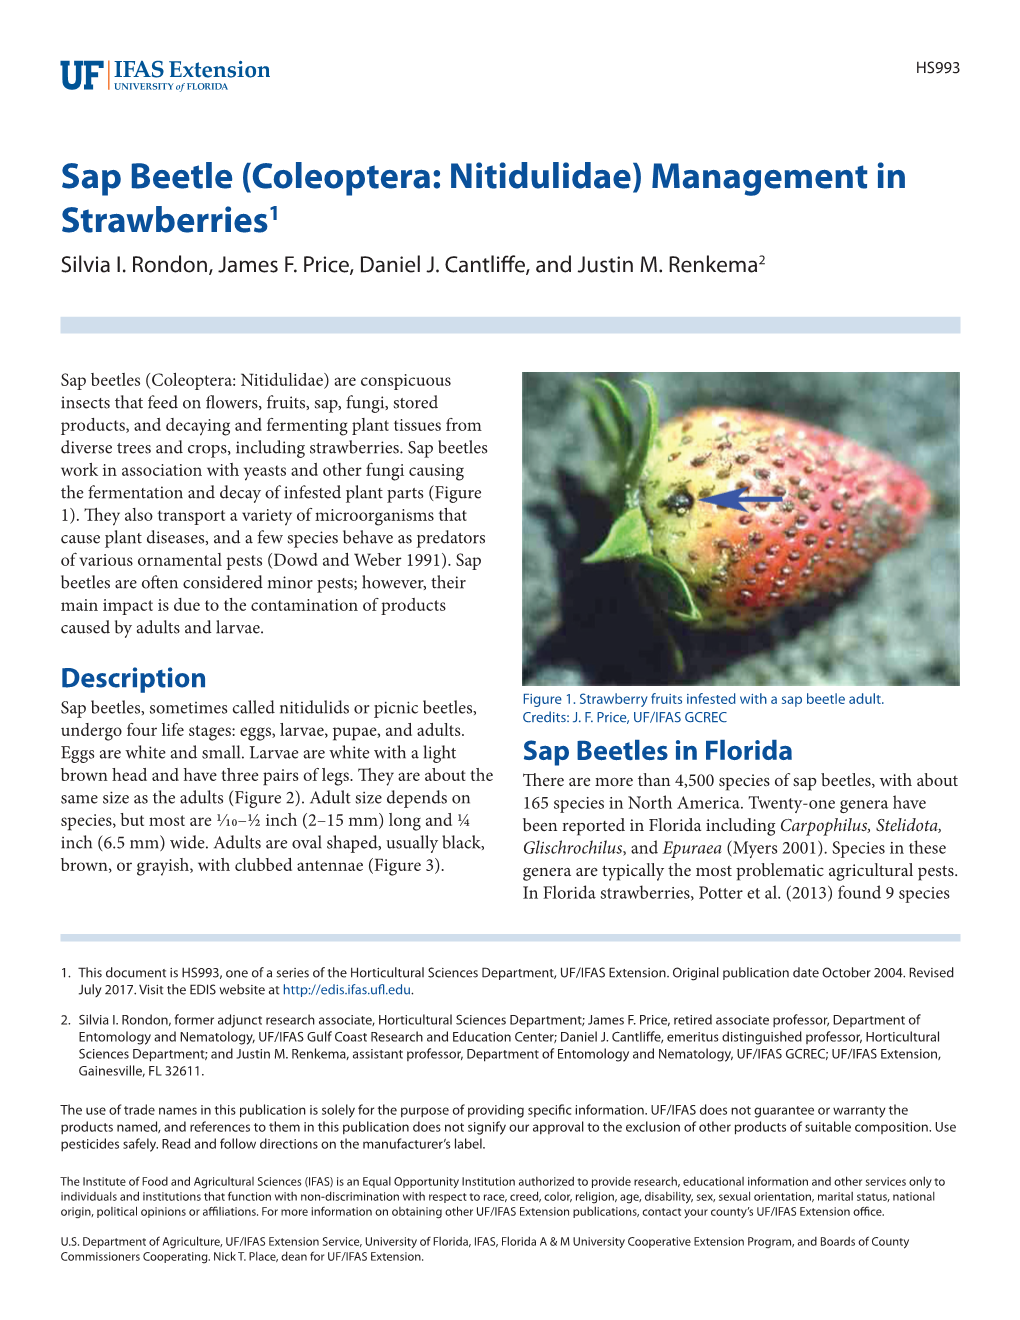 Sap Beetle (Coleoptera: Nitidulidae) Management in Strawberries1 Silvia I